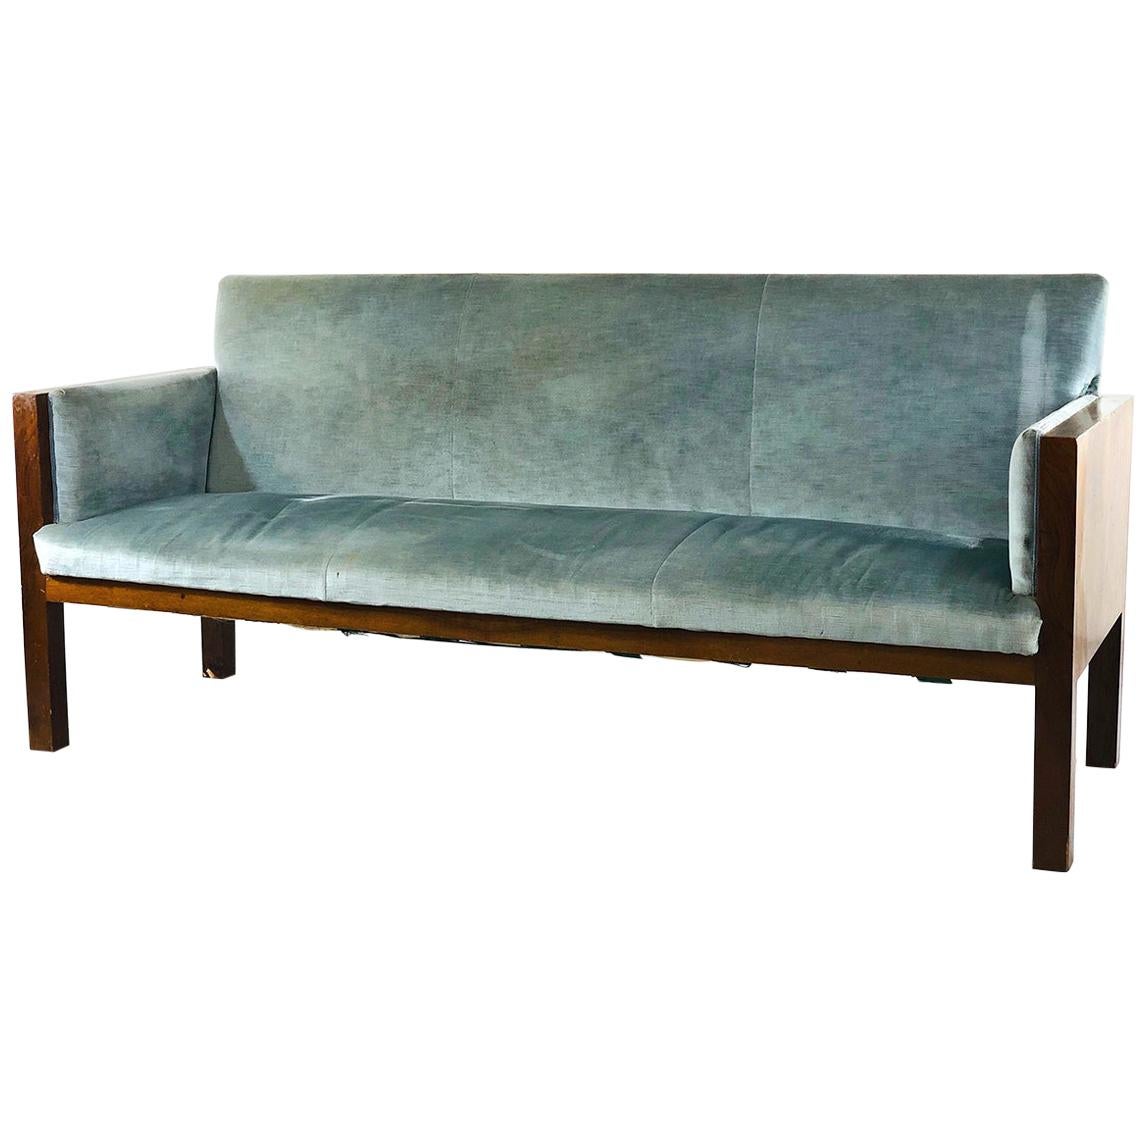 Three-Seat Sofa Attributed to Franco Albini, 1940s